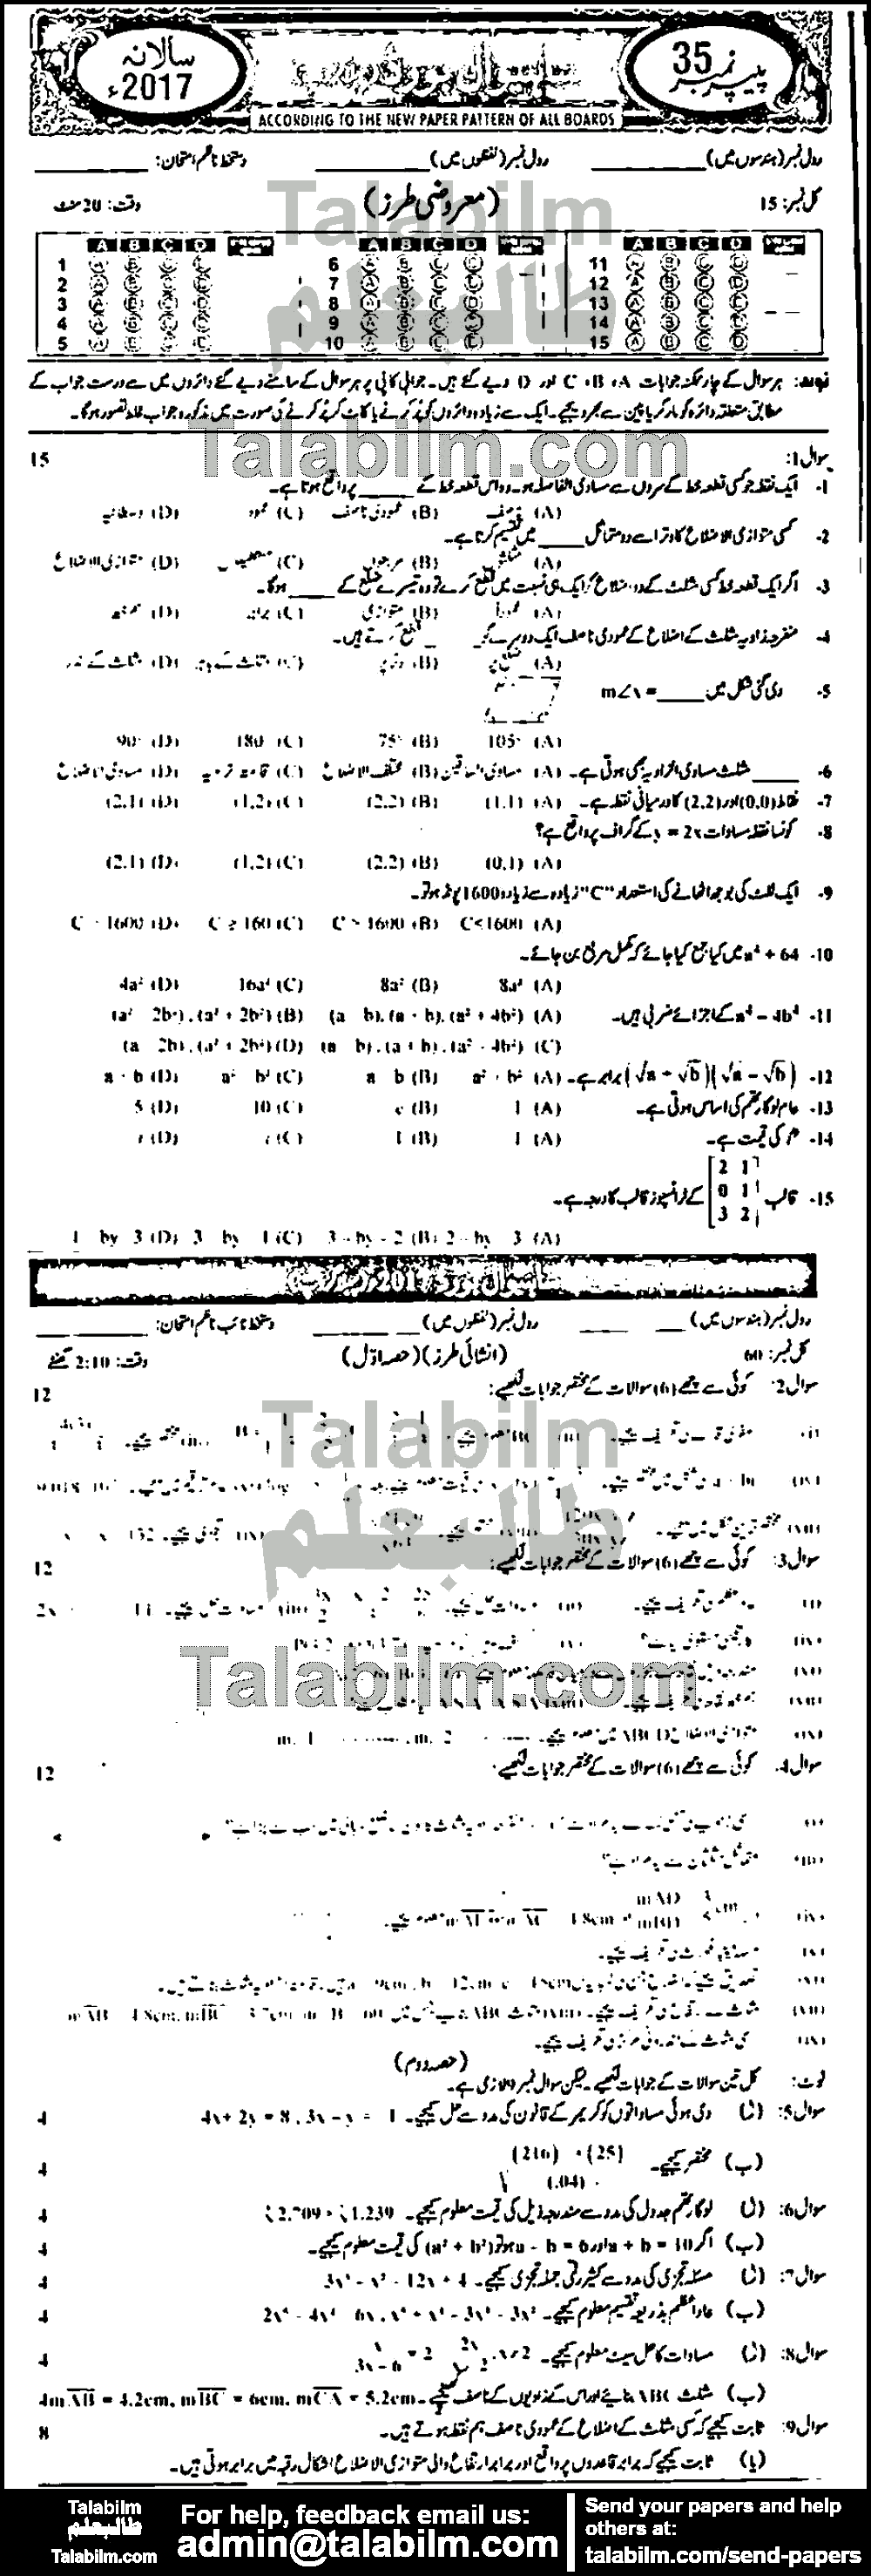 General Math 0 past paper for Urdu Medium 2017 Group-I